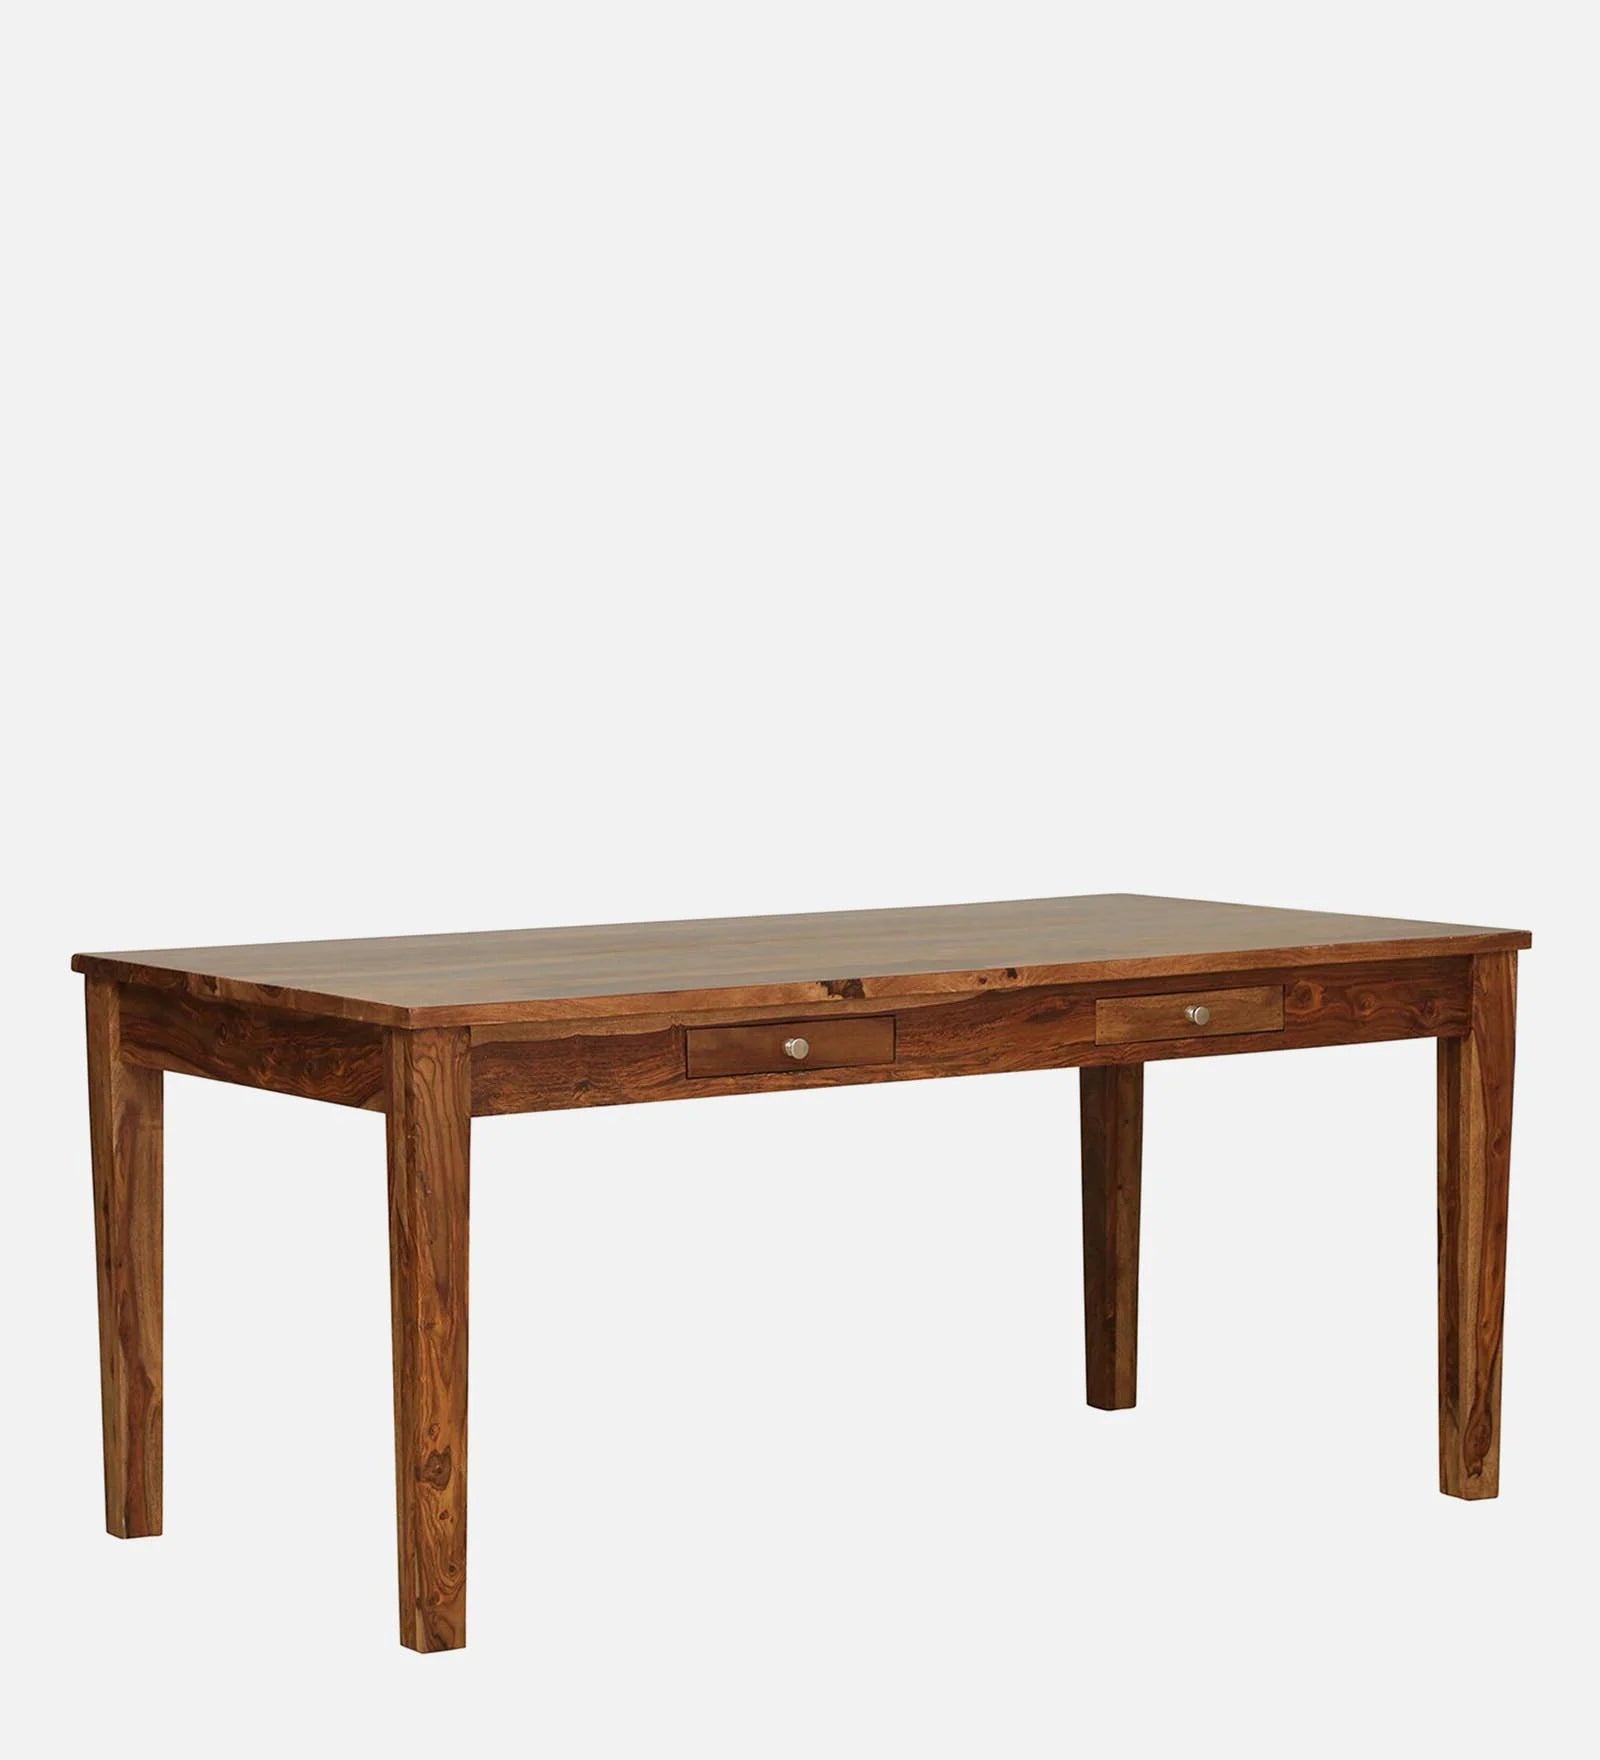 Oslo Solid Wood 6 Seater Dining Table In Rustic Teak Finish By Rajwada - Rajwada Furnish